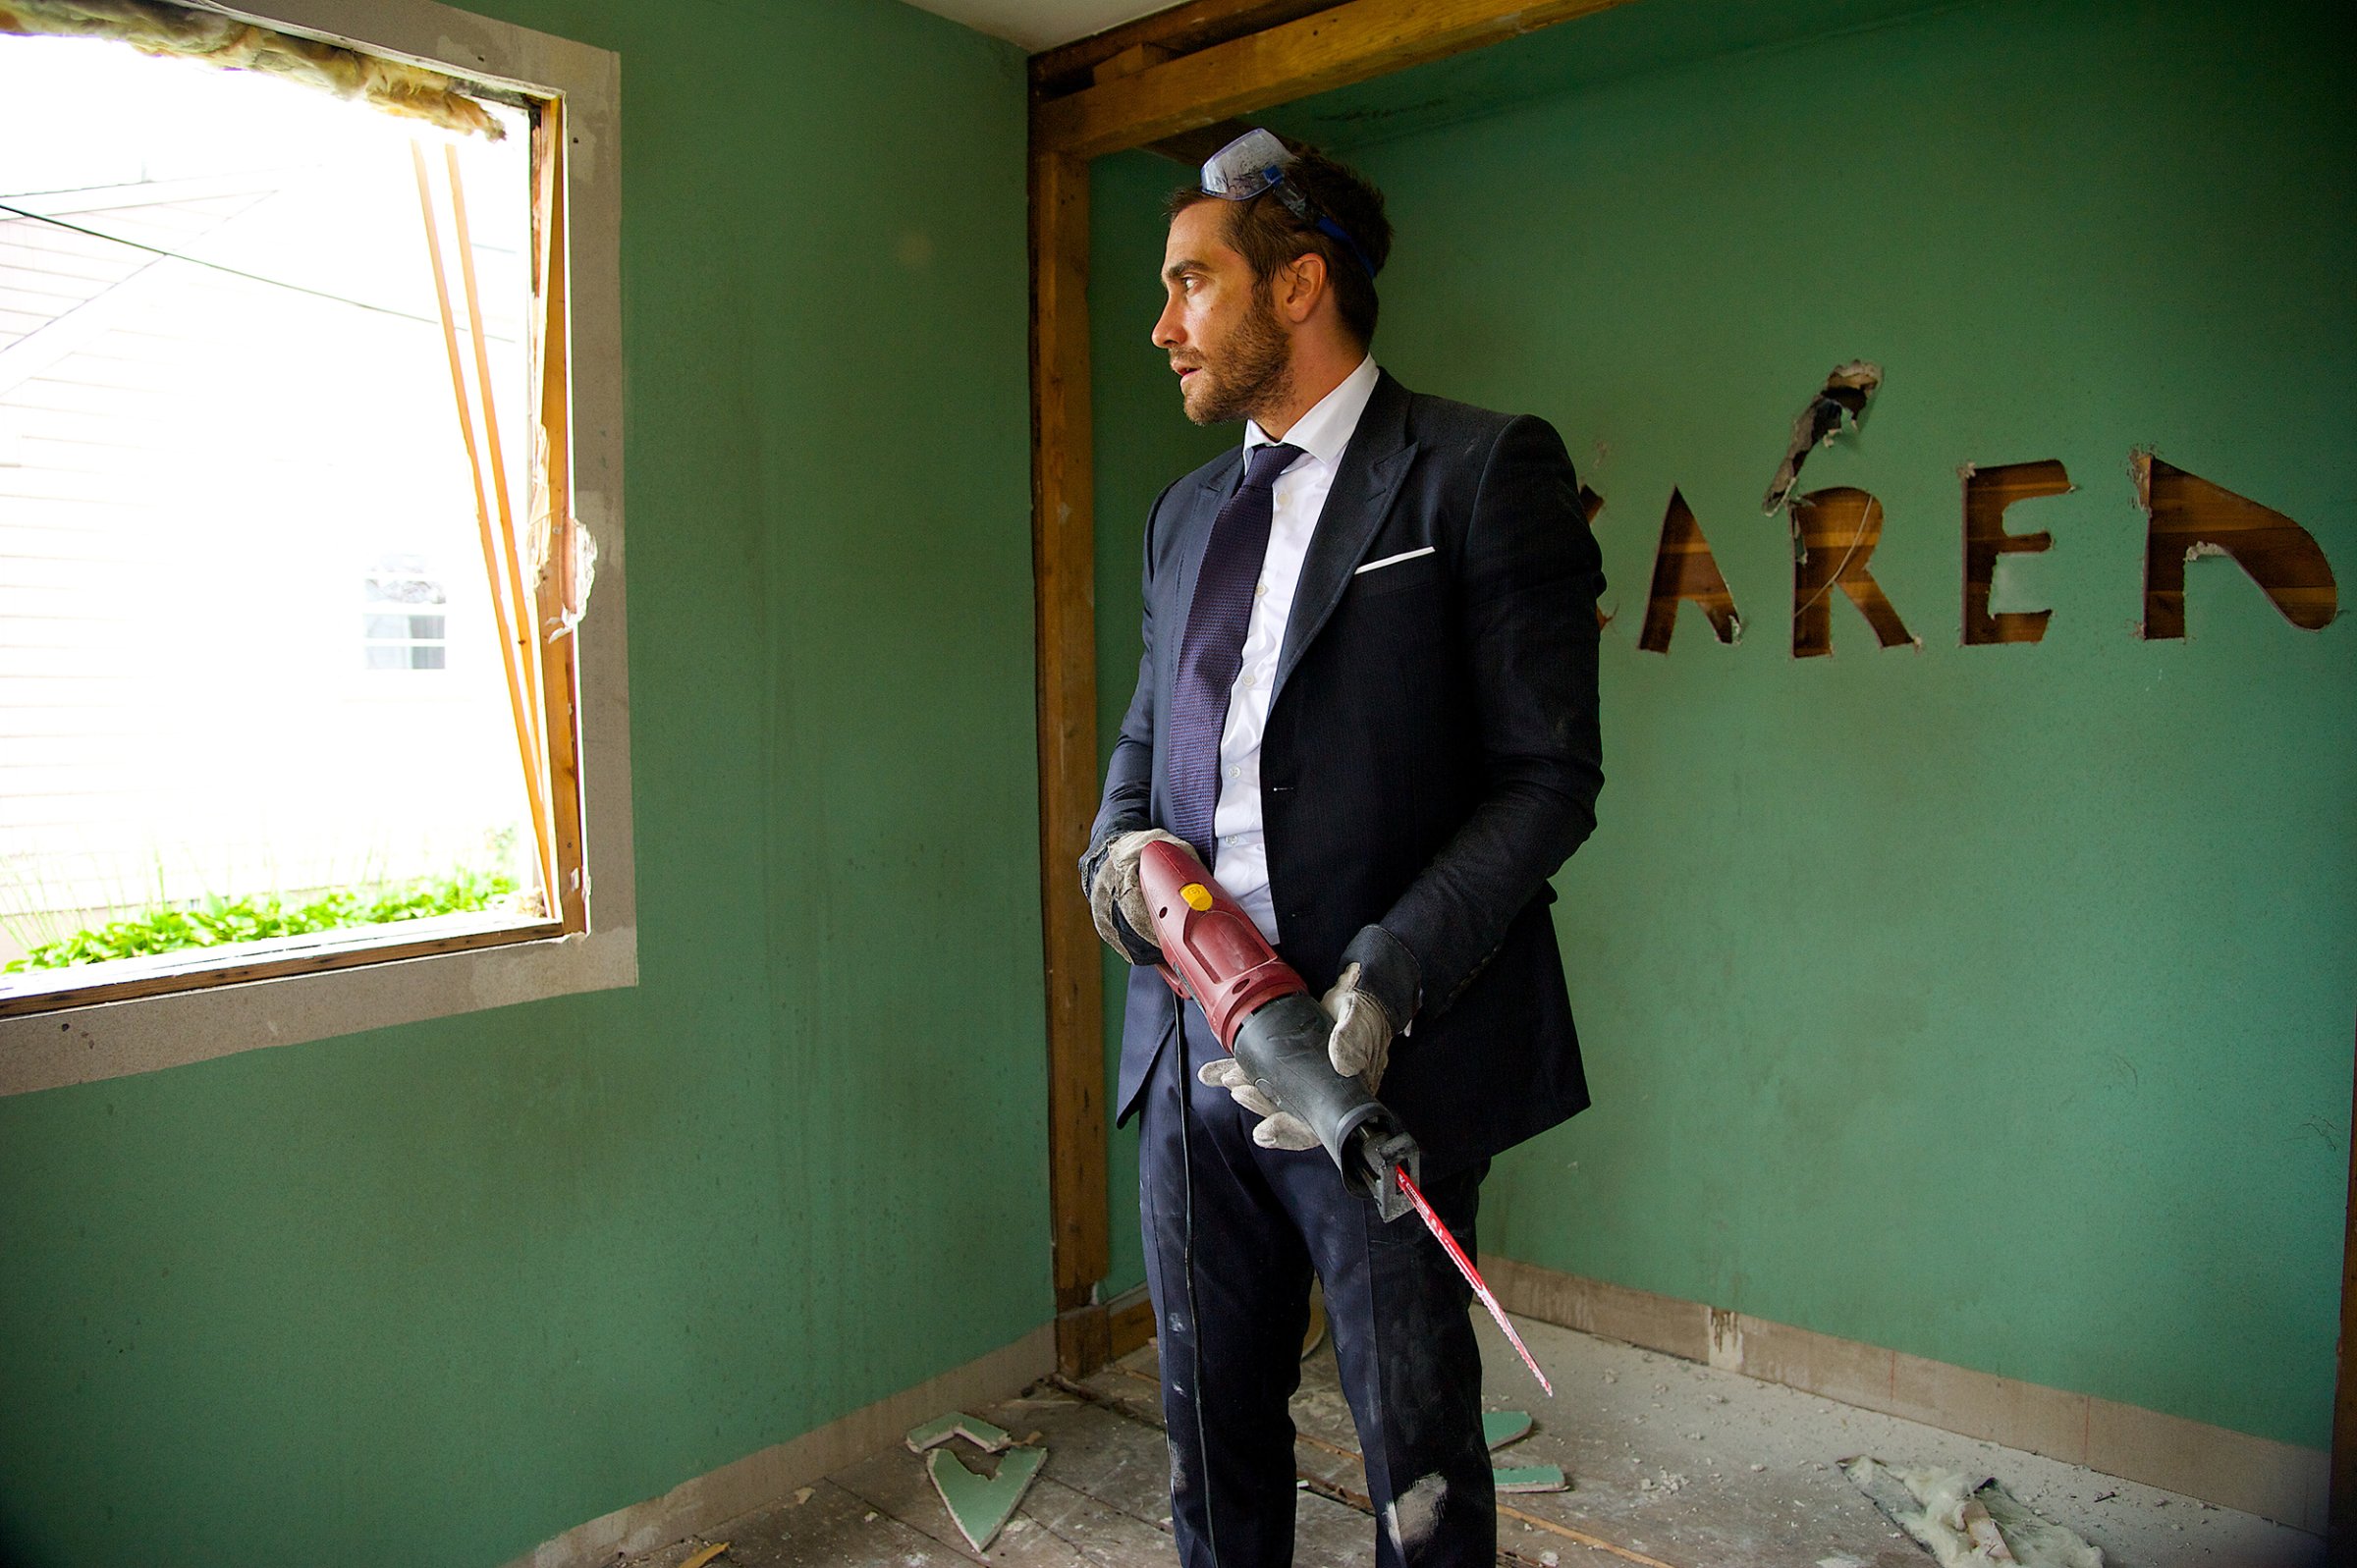 Jake Gyllenhaal in “Demolition.”